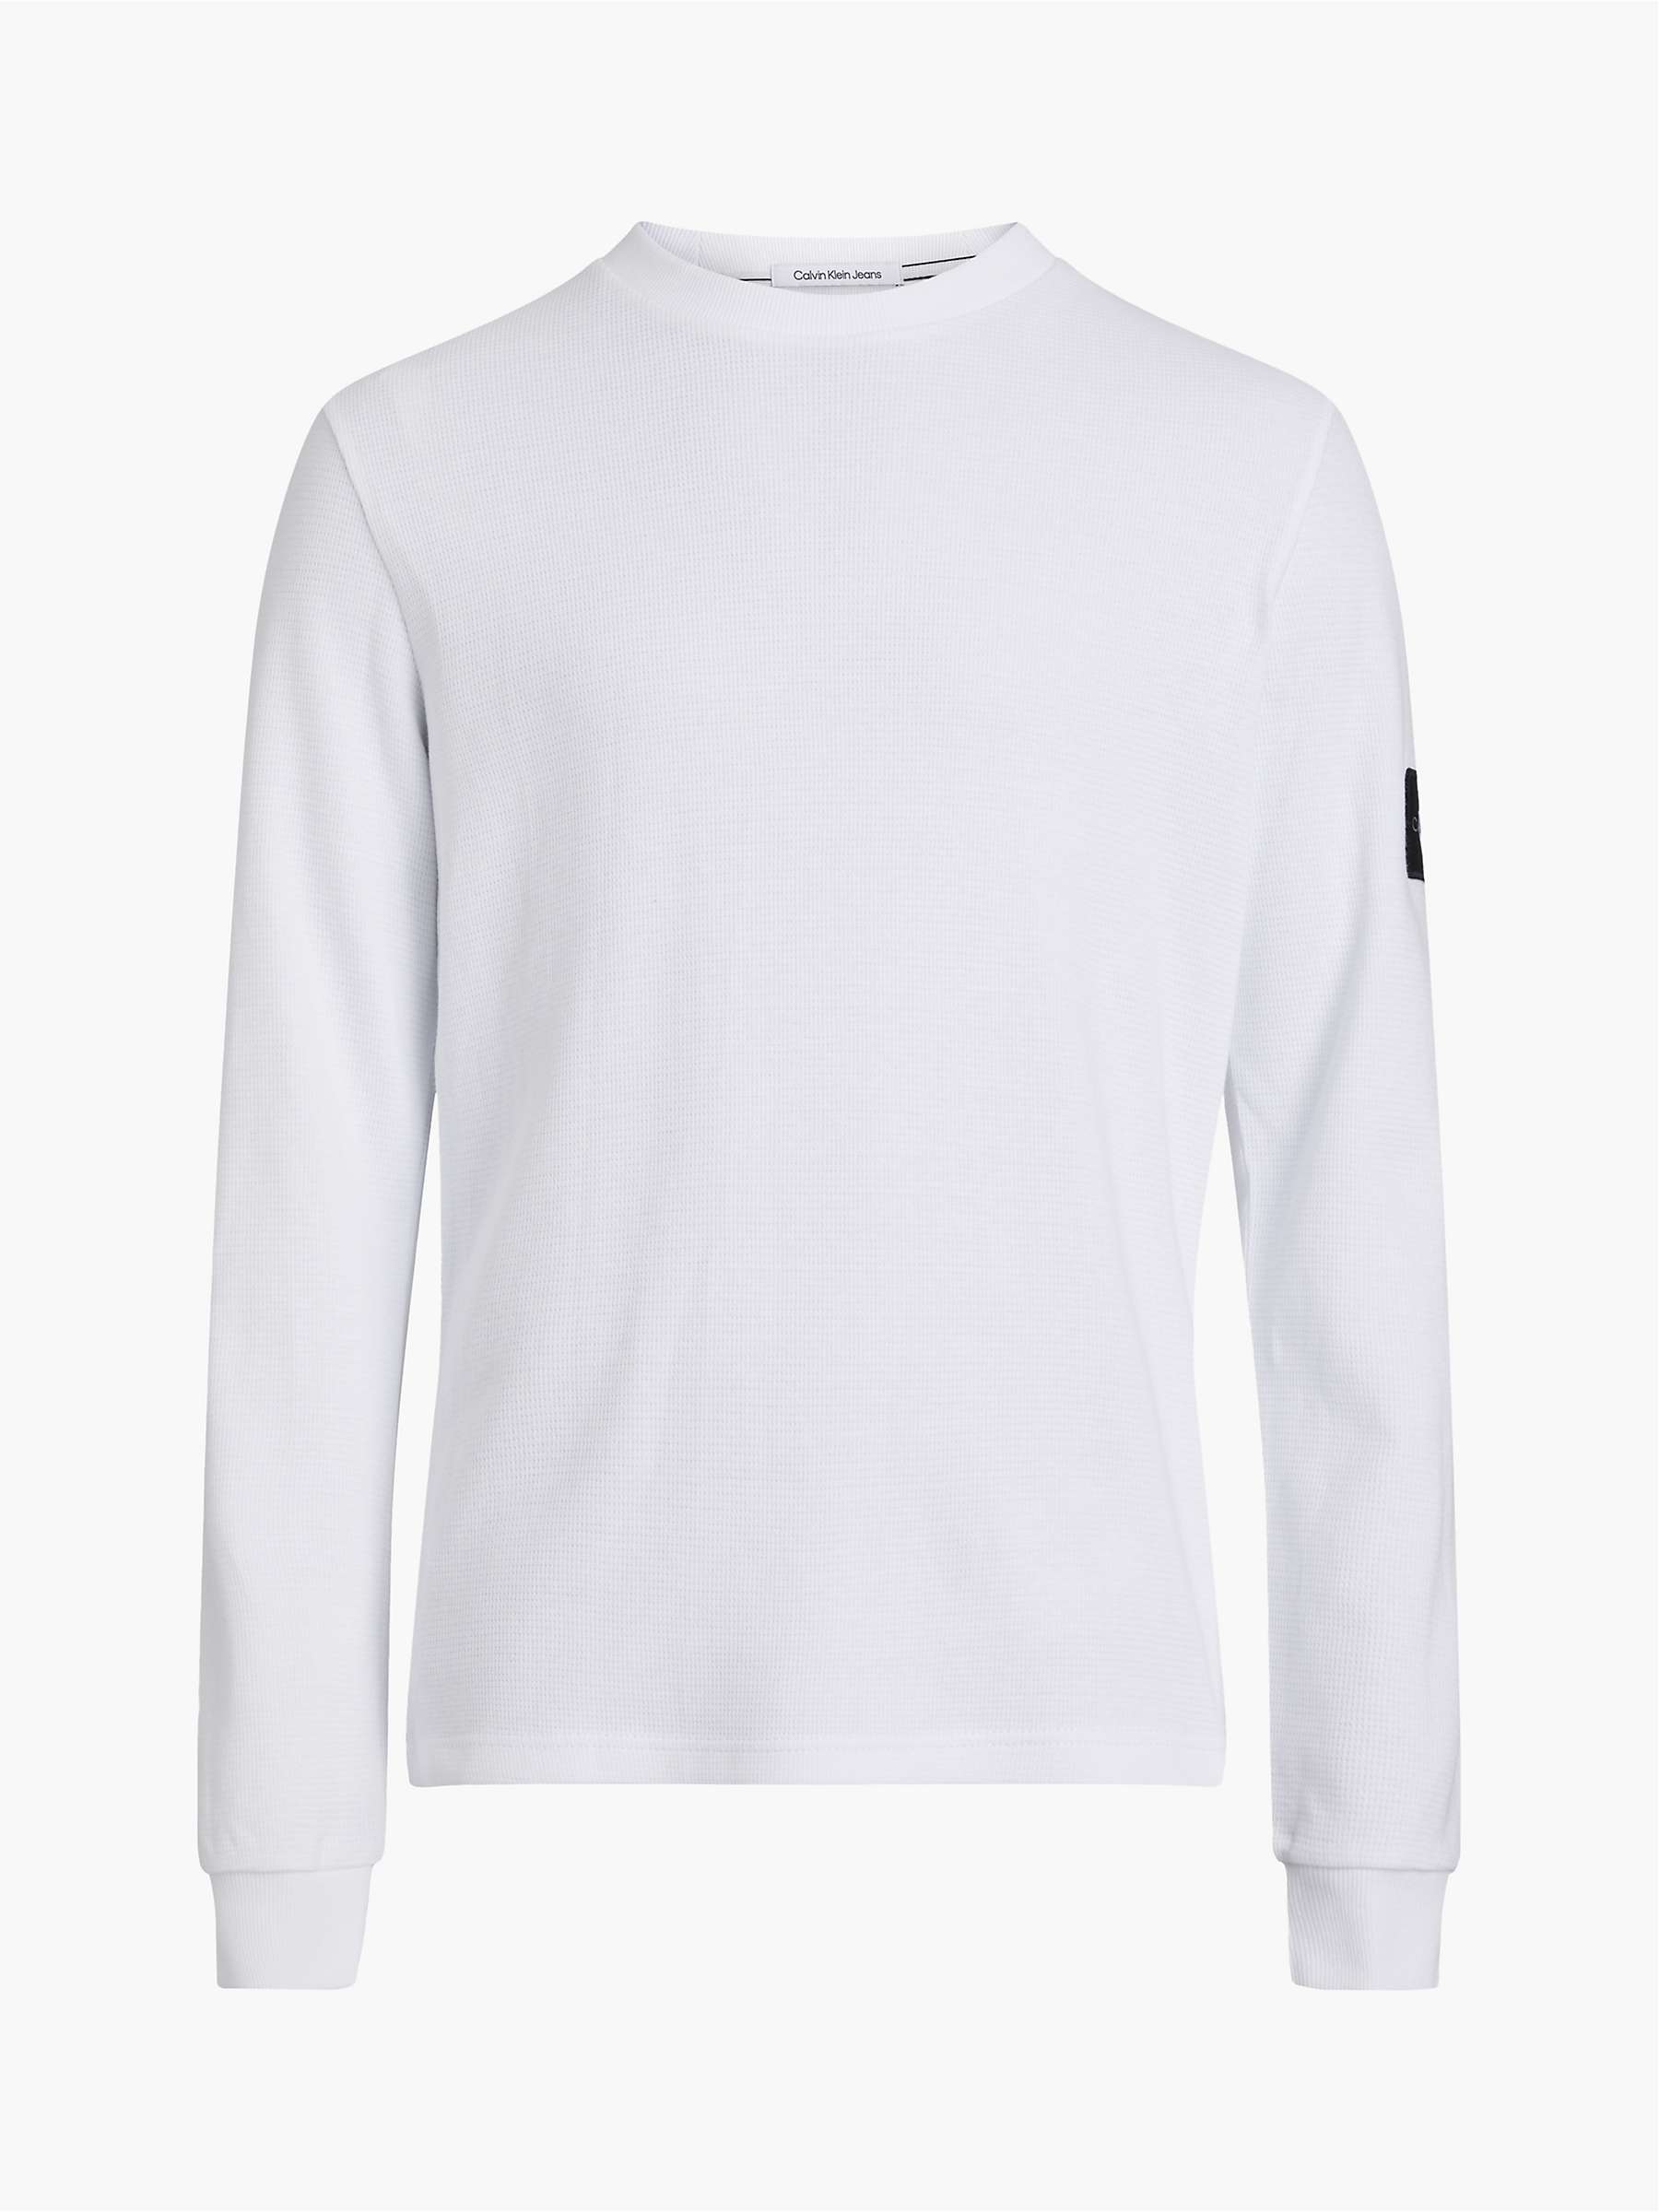 Buy Calvin Klein Crew Neck T-Shirt, Bright White Online at johnlewis.com